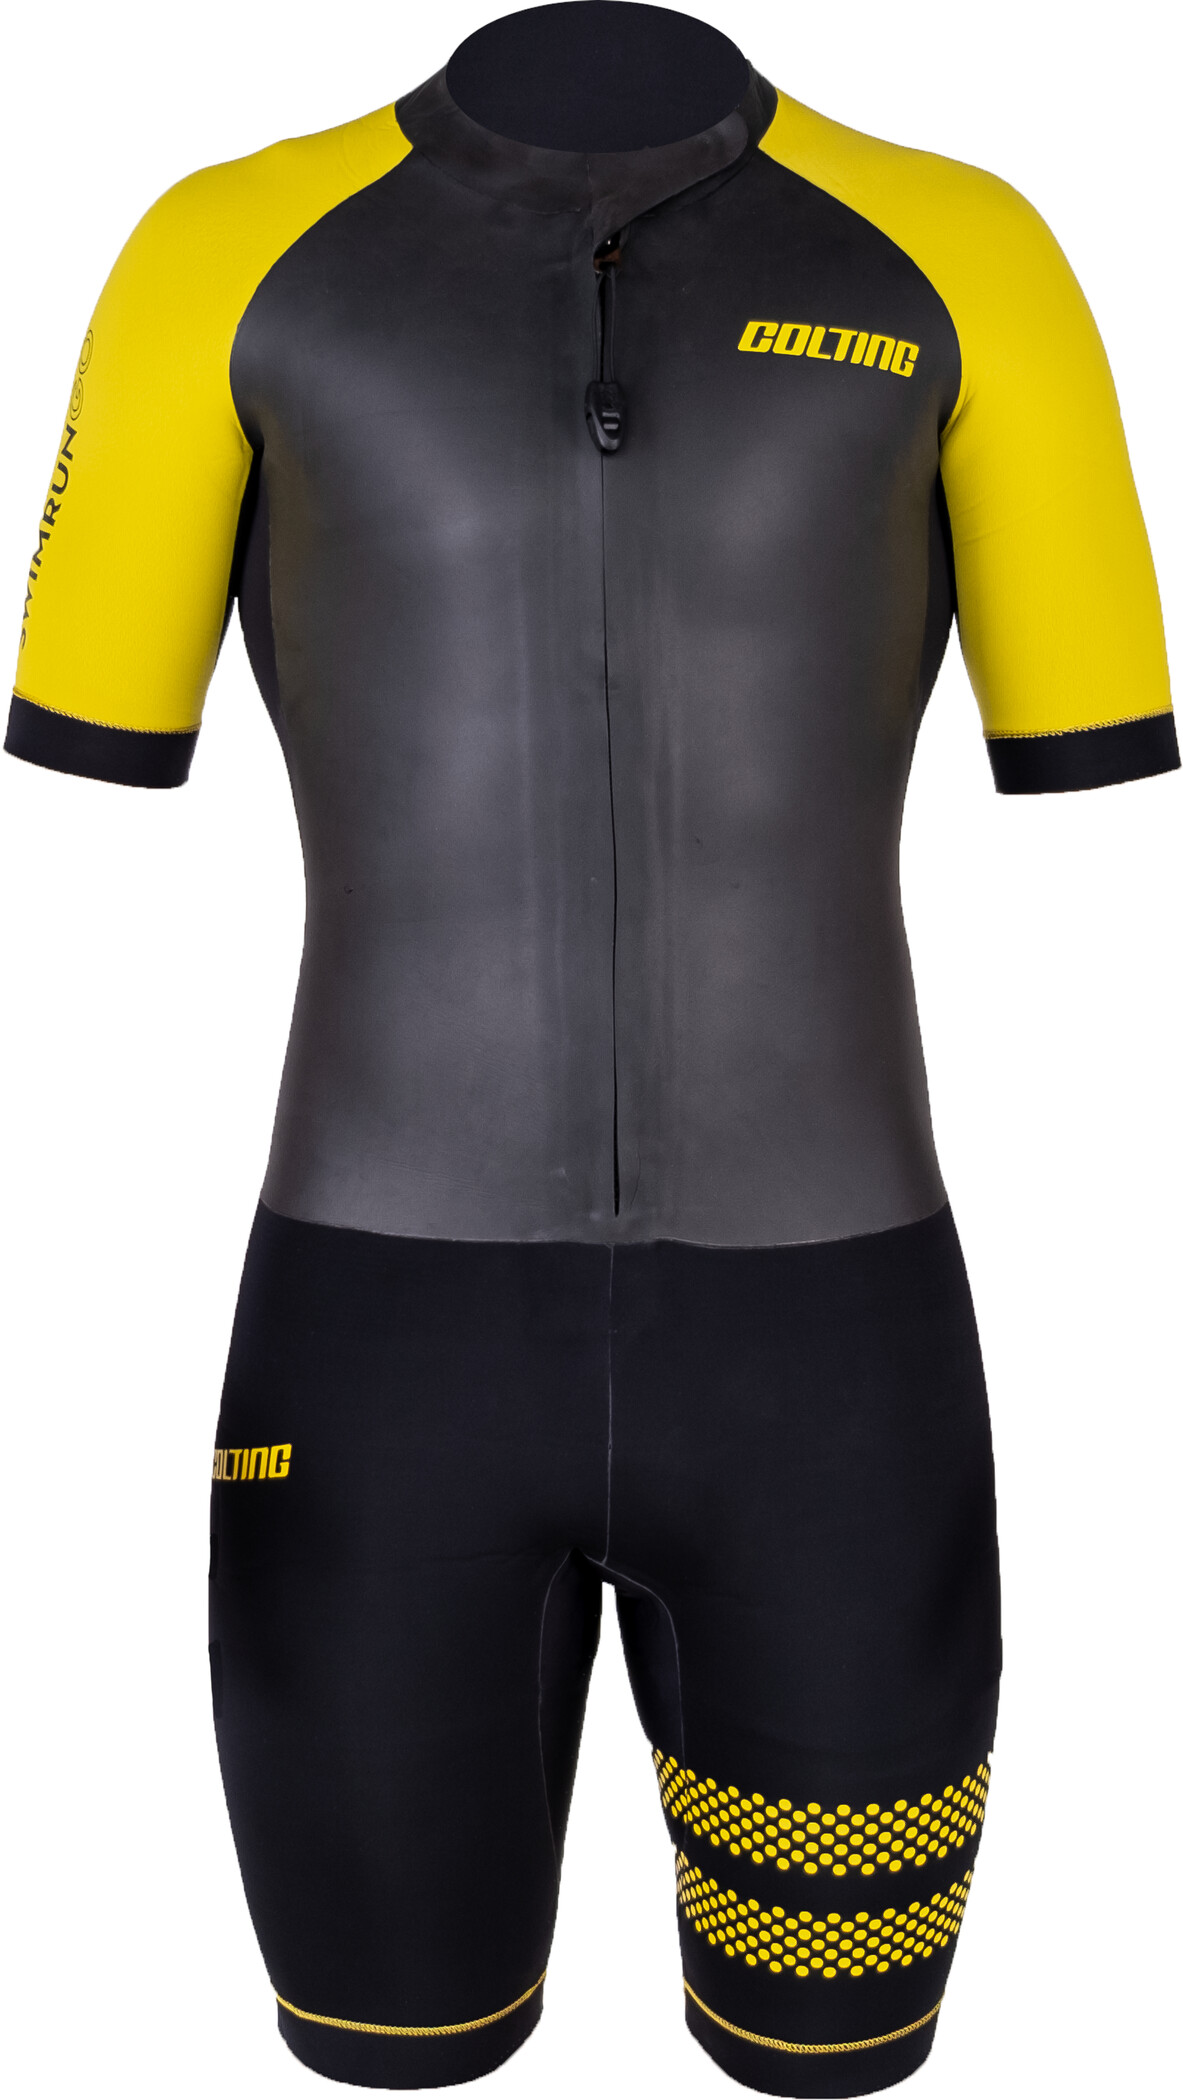 Colting Wetsuits Swimrun Go Wetsuit Men black/yellow | Bikester.co.uk